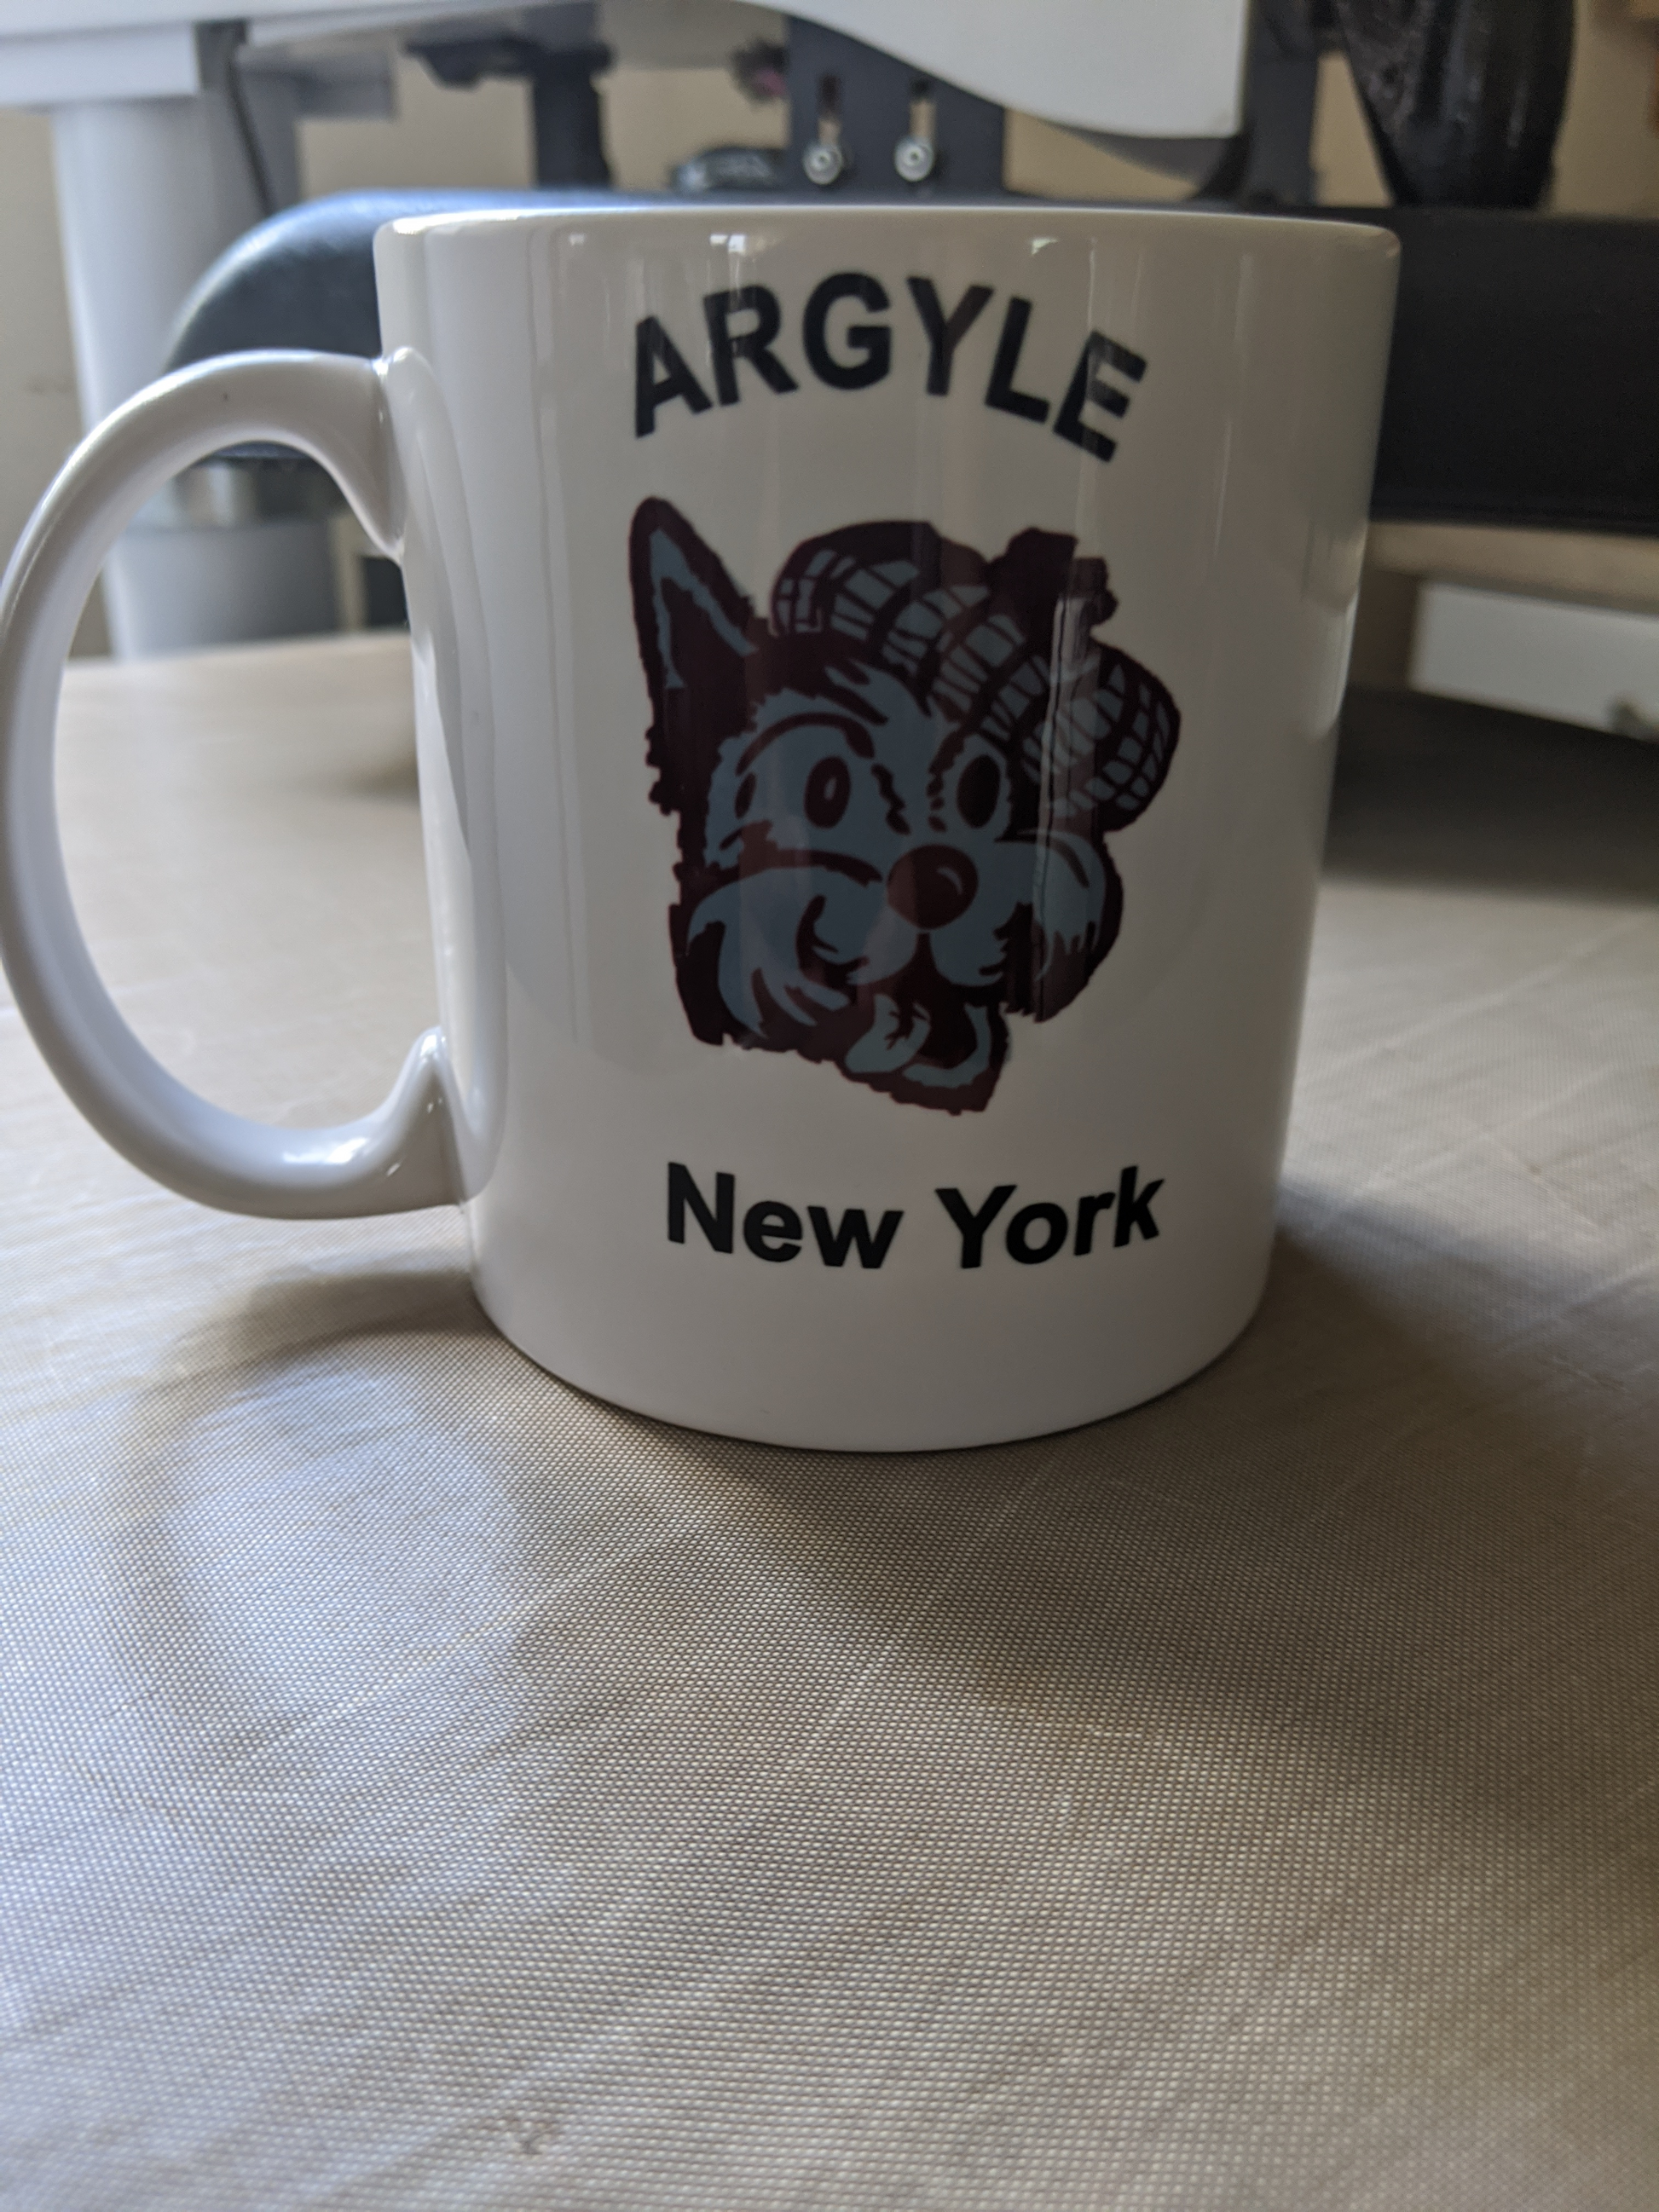 Right side of Argyle Coffee mug